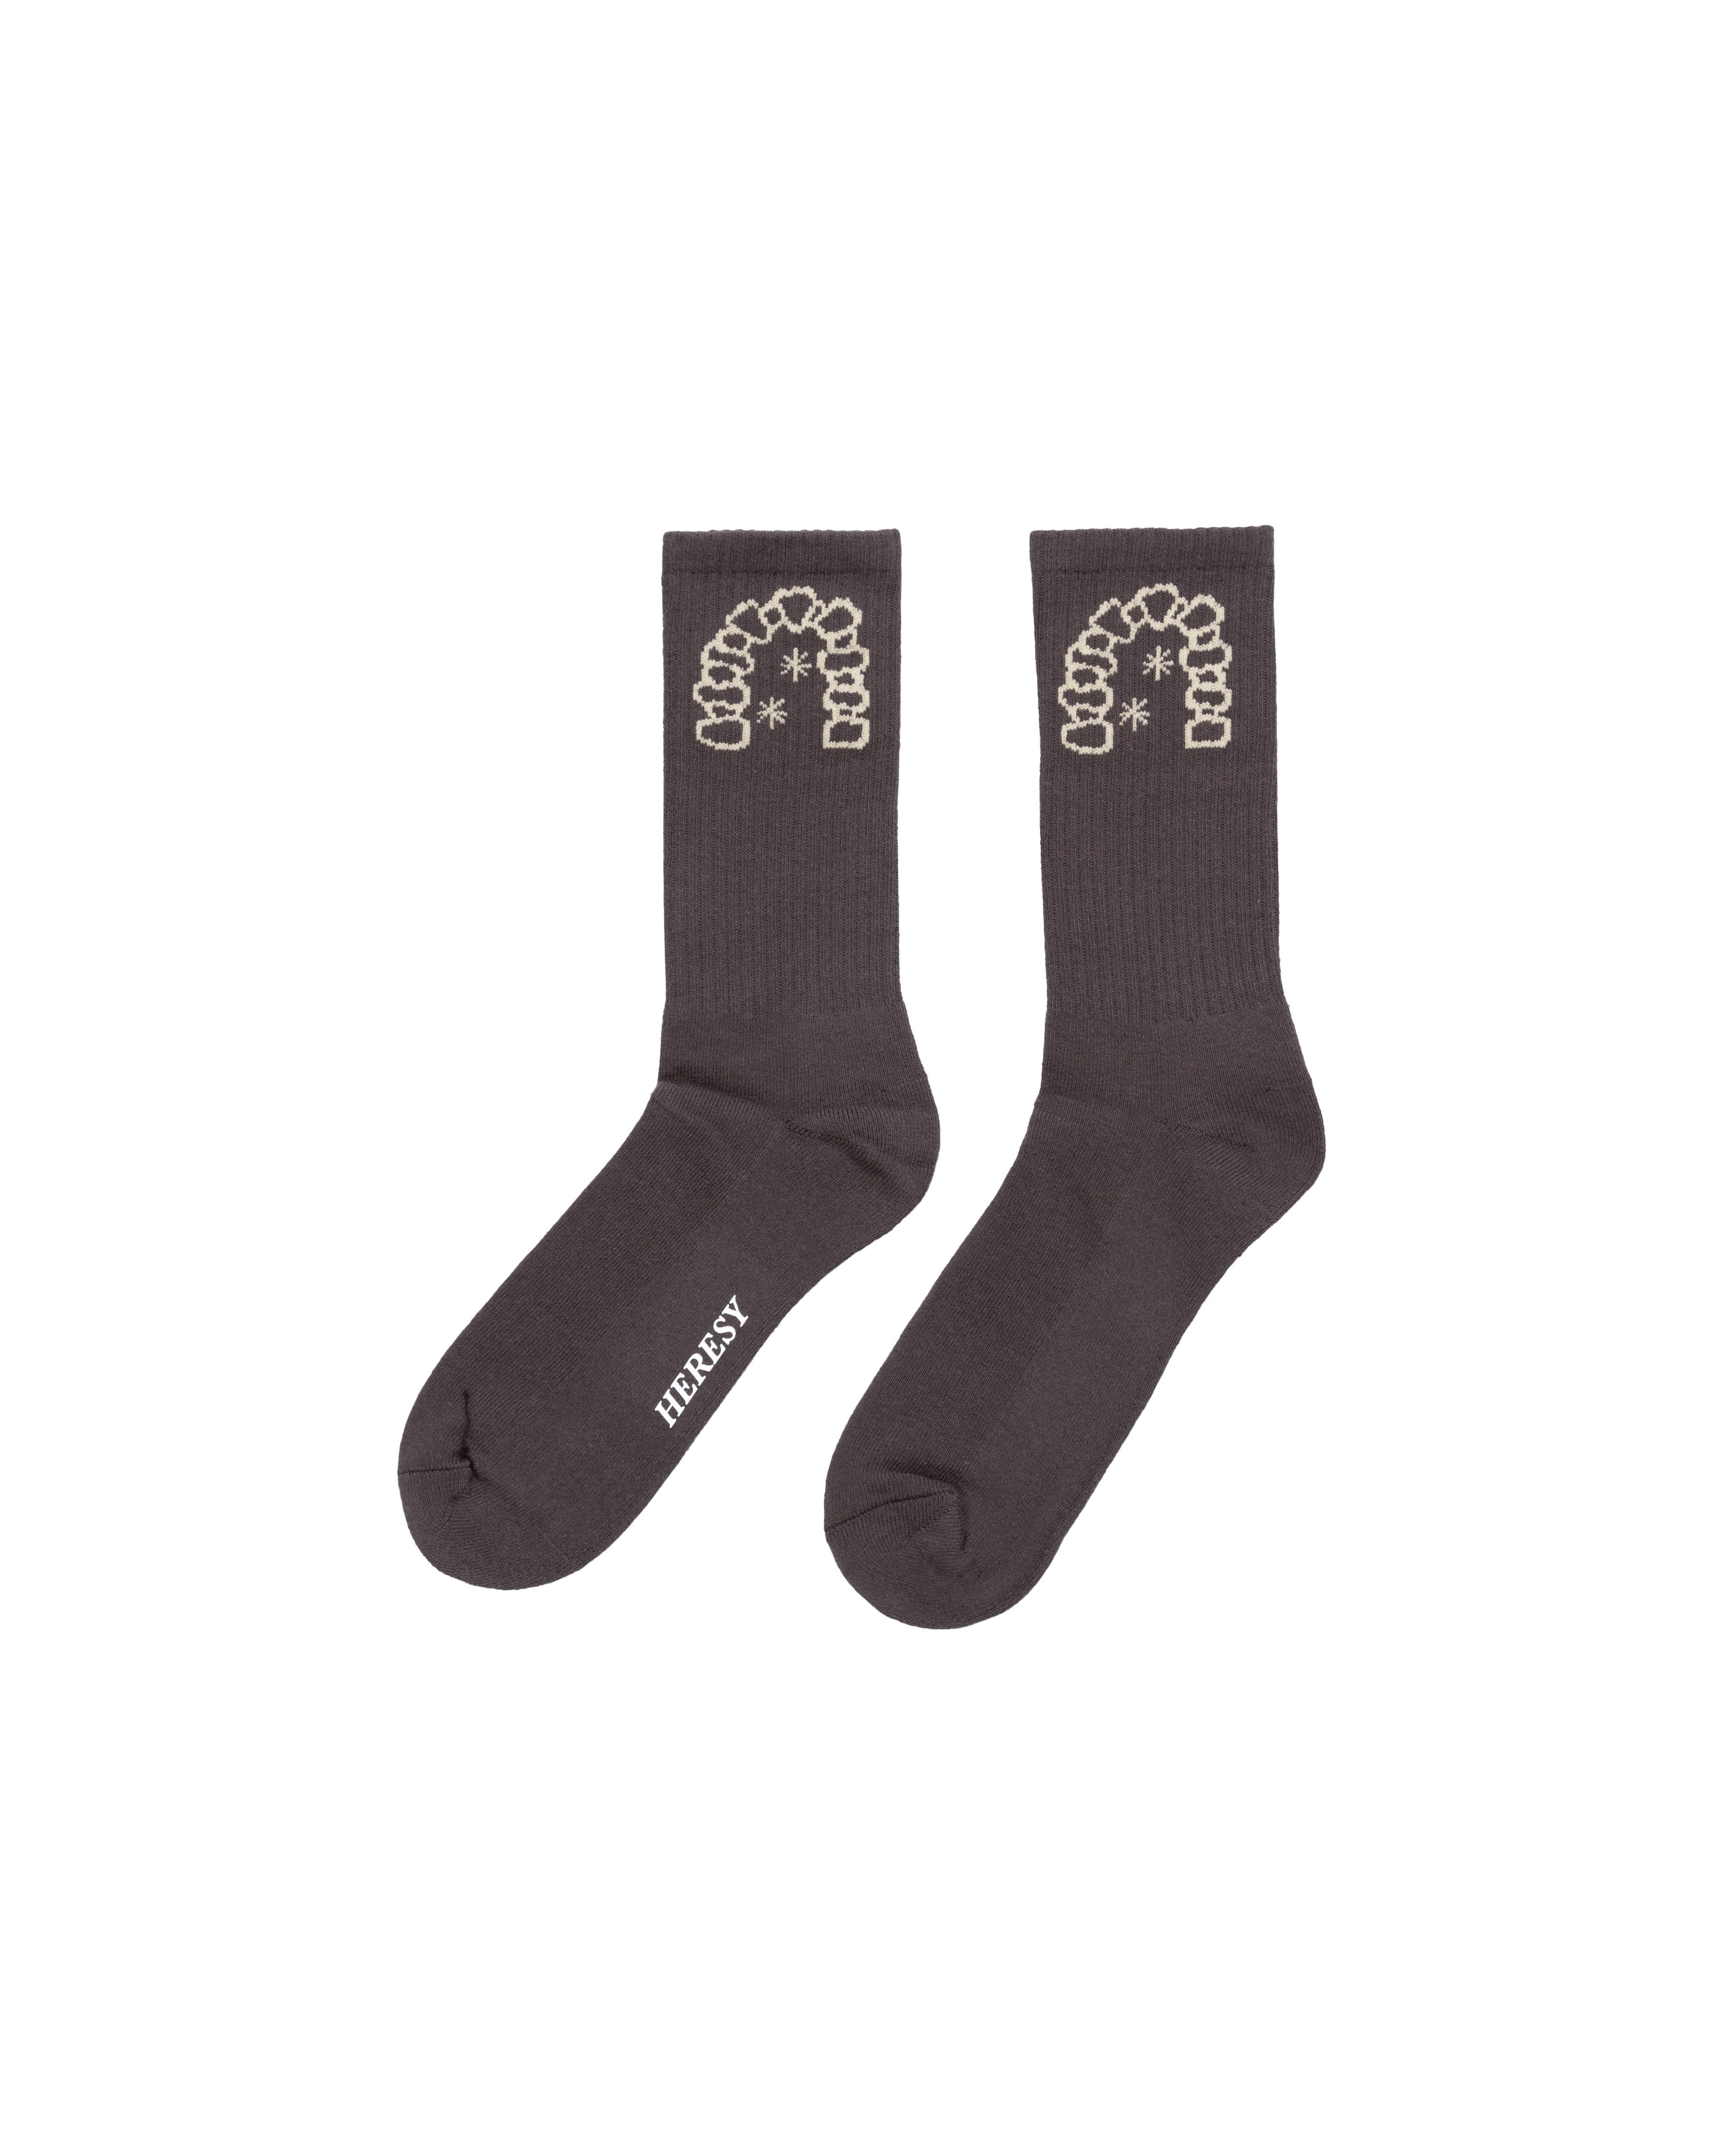 Arch Socks - Black